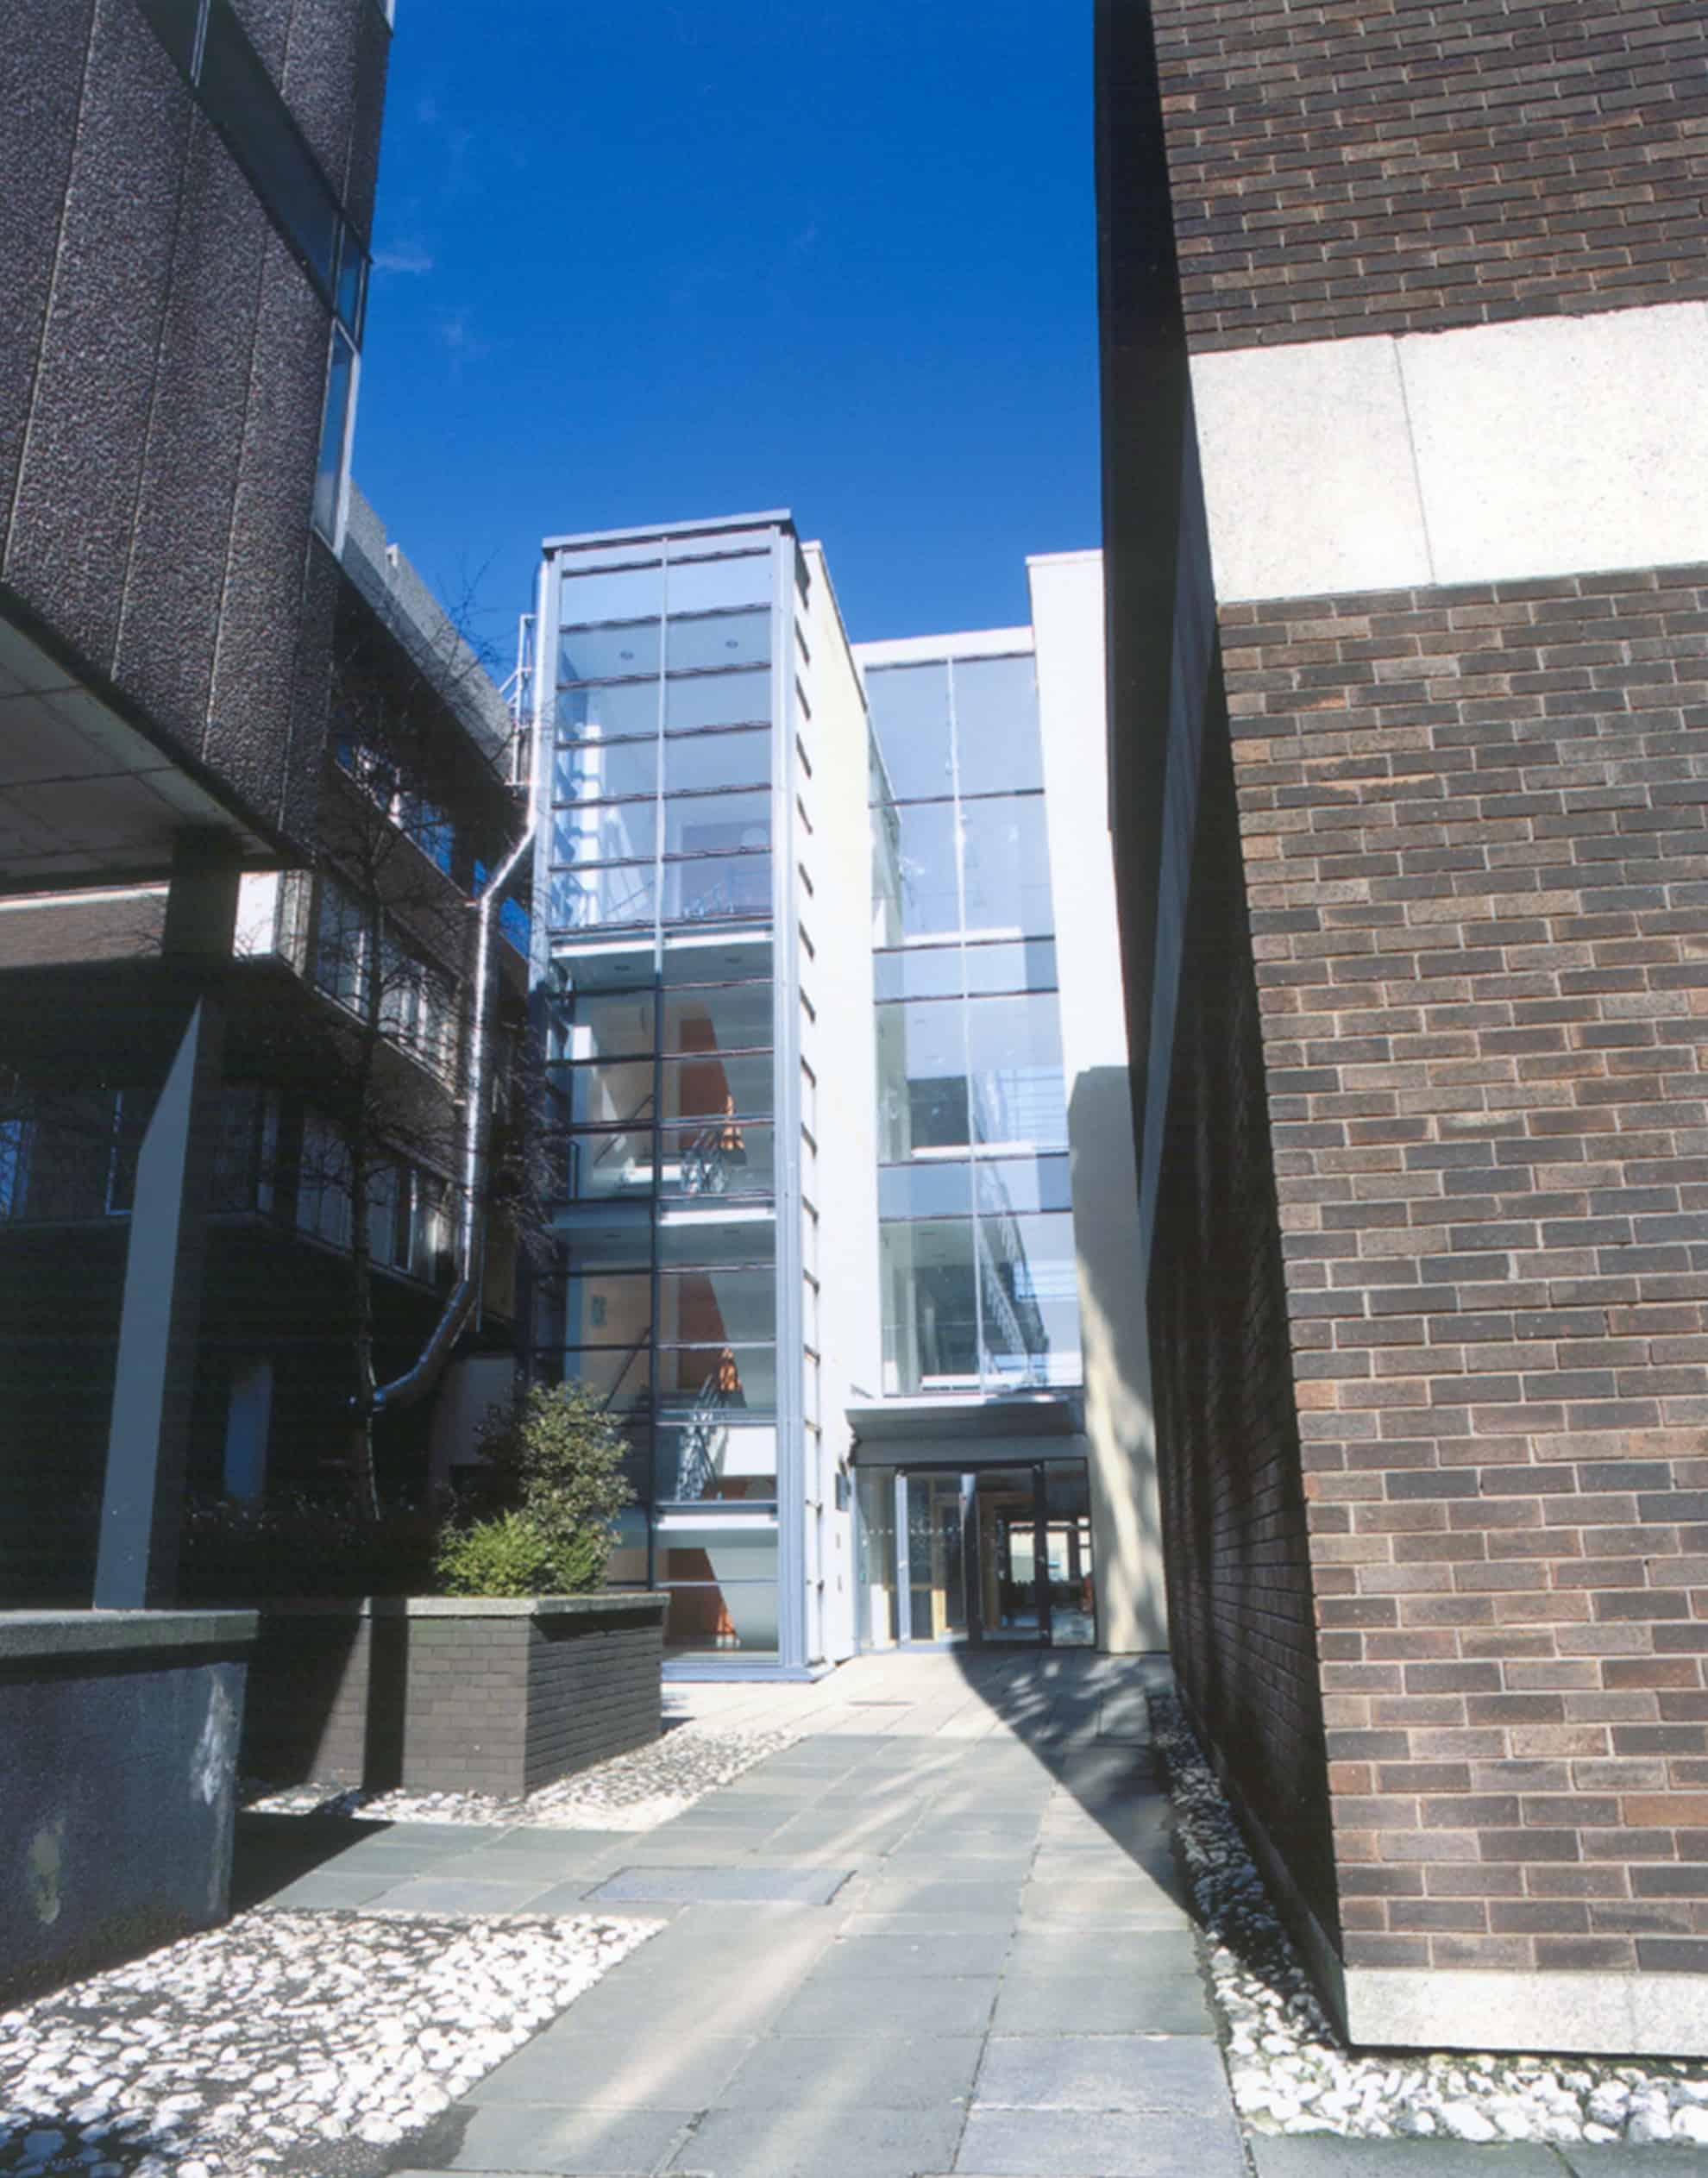 Pharmaceutical Sciences Research Centre, Queen’s University Belfast